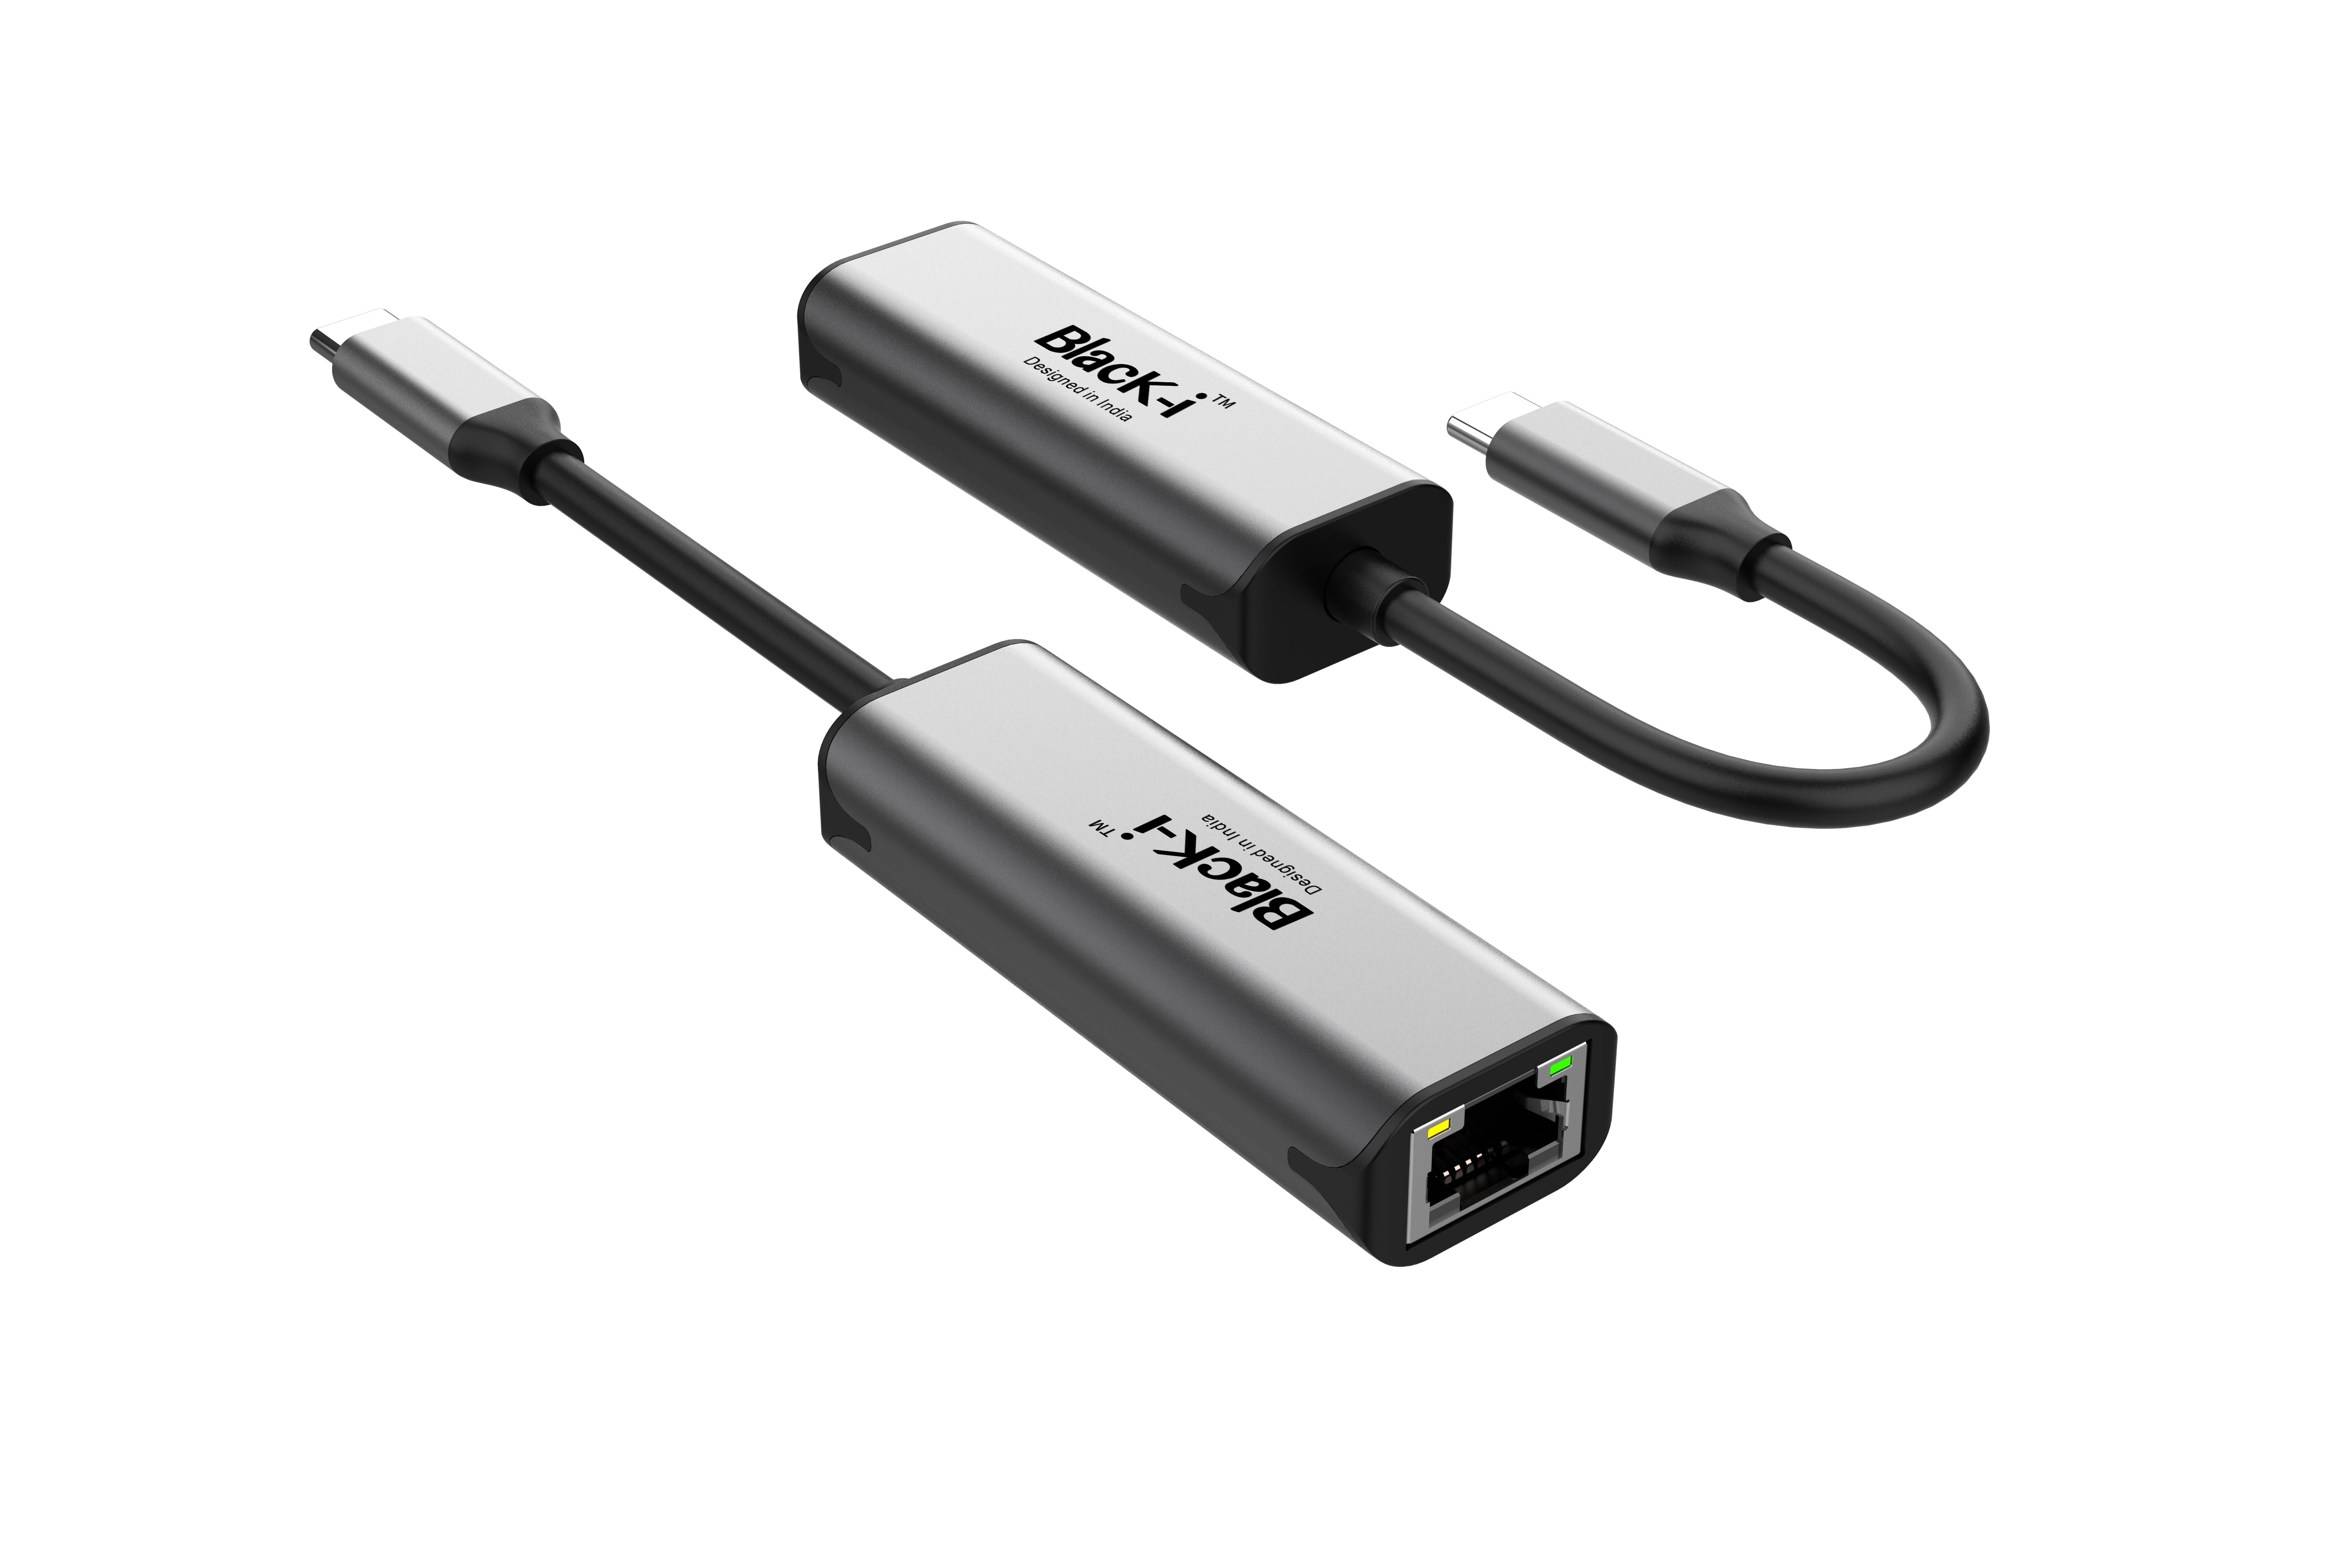 Black-i USB-C to 2.5 G Gigabit Lan Converter